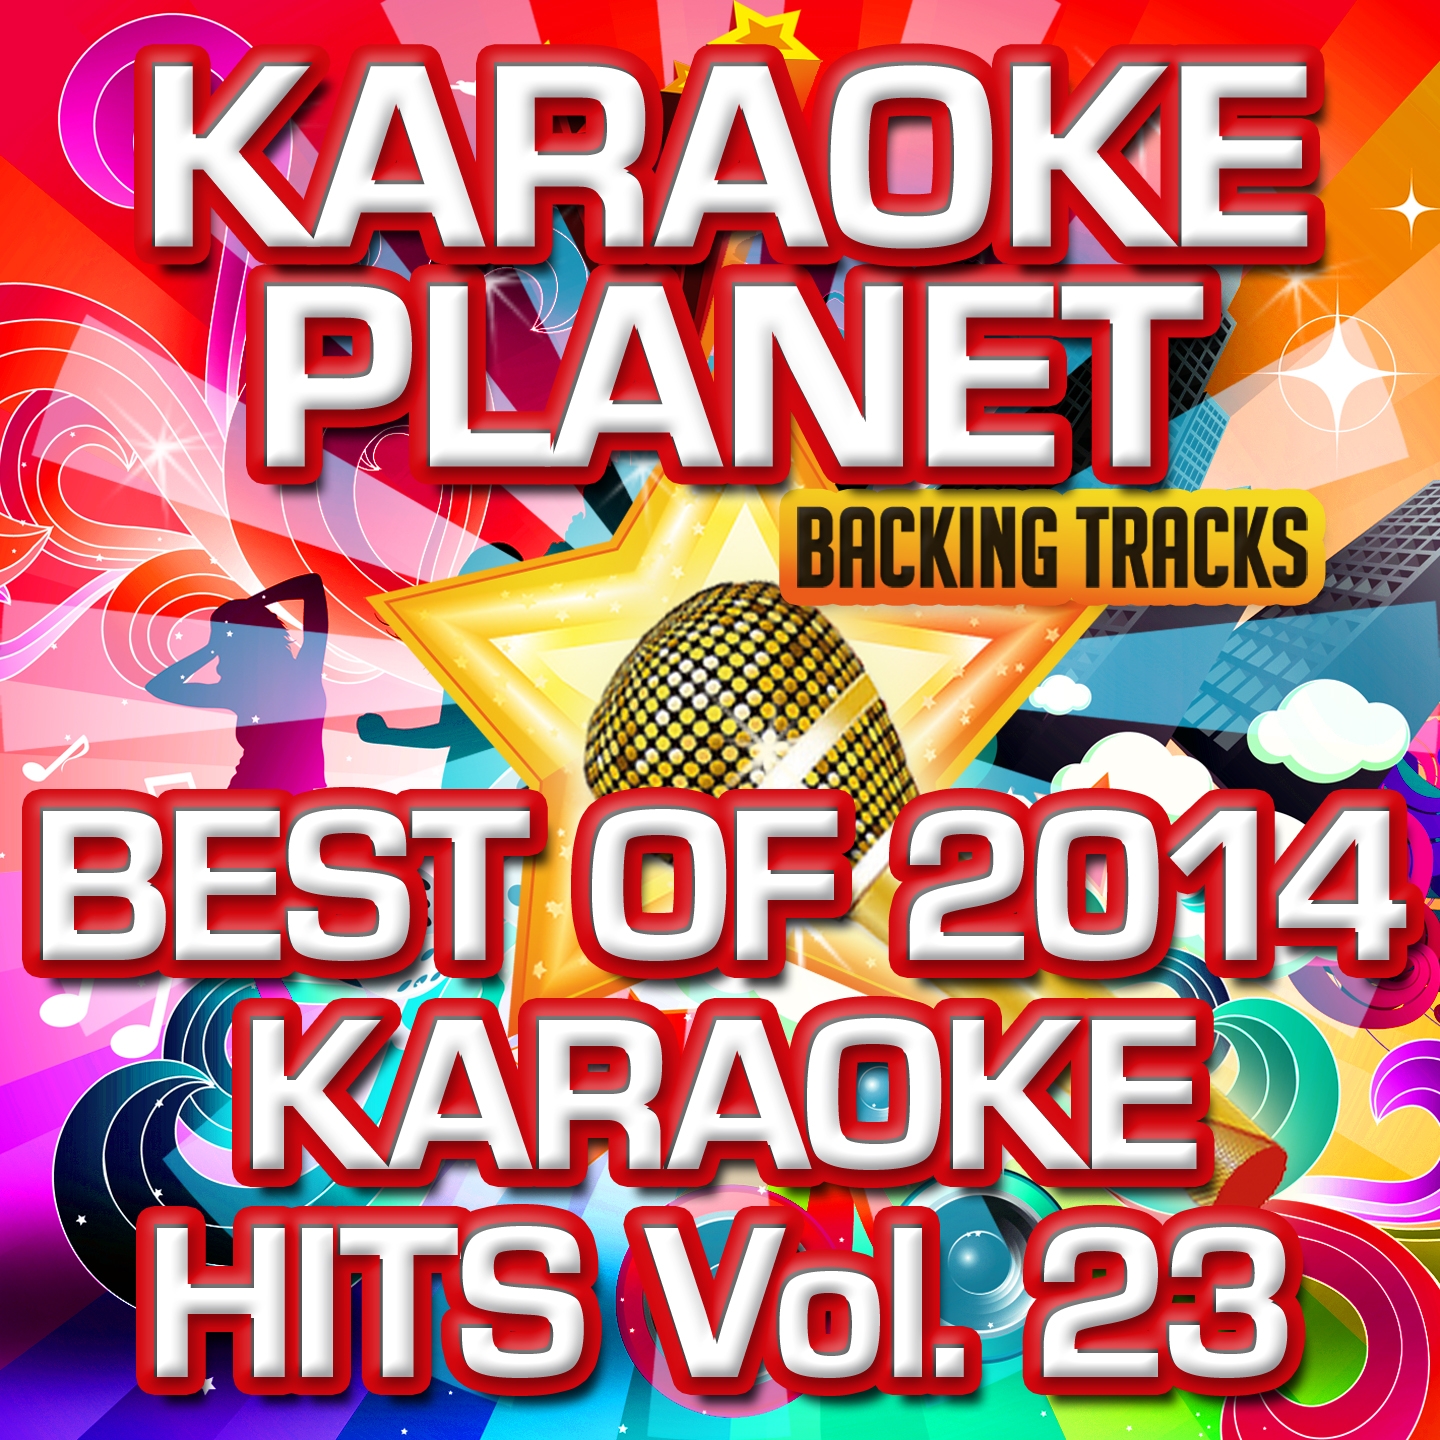 Best of 2014 Karaoke Hits, Vol. 23